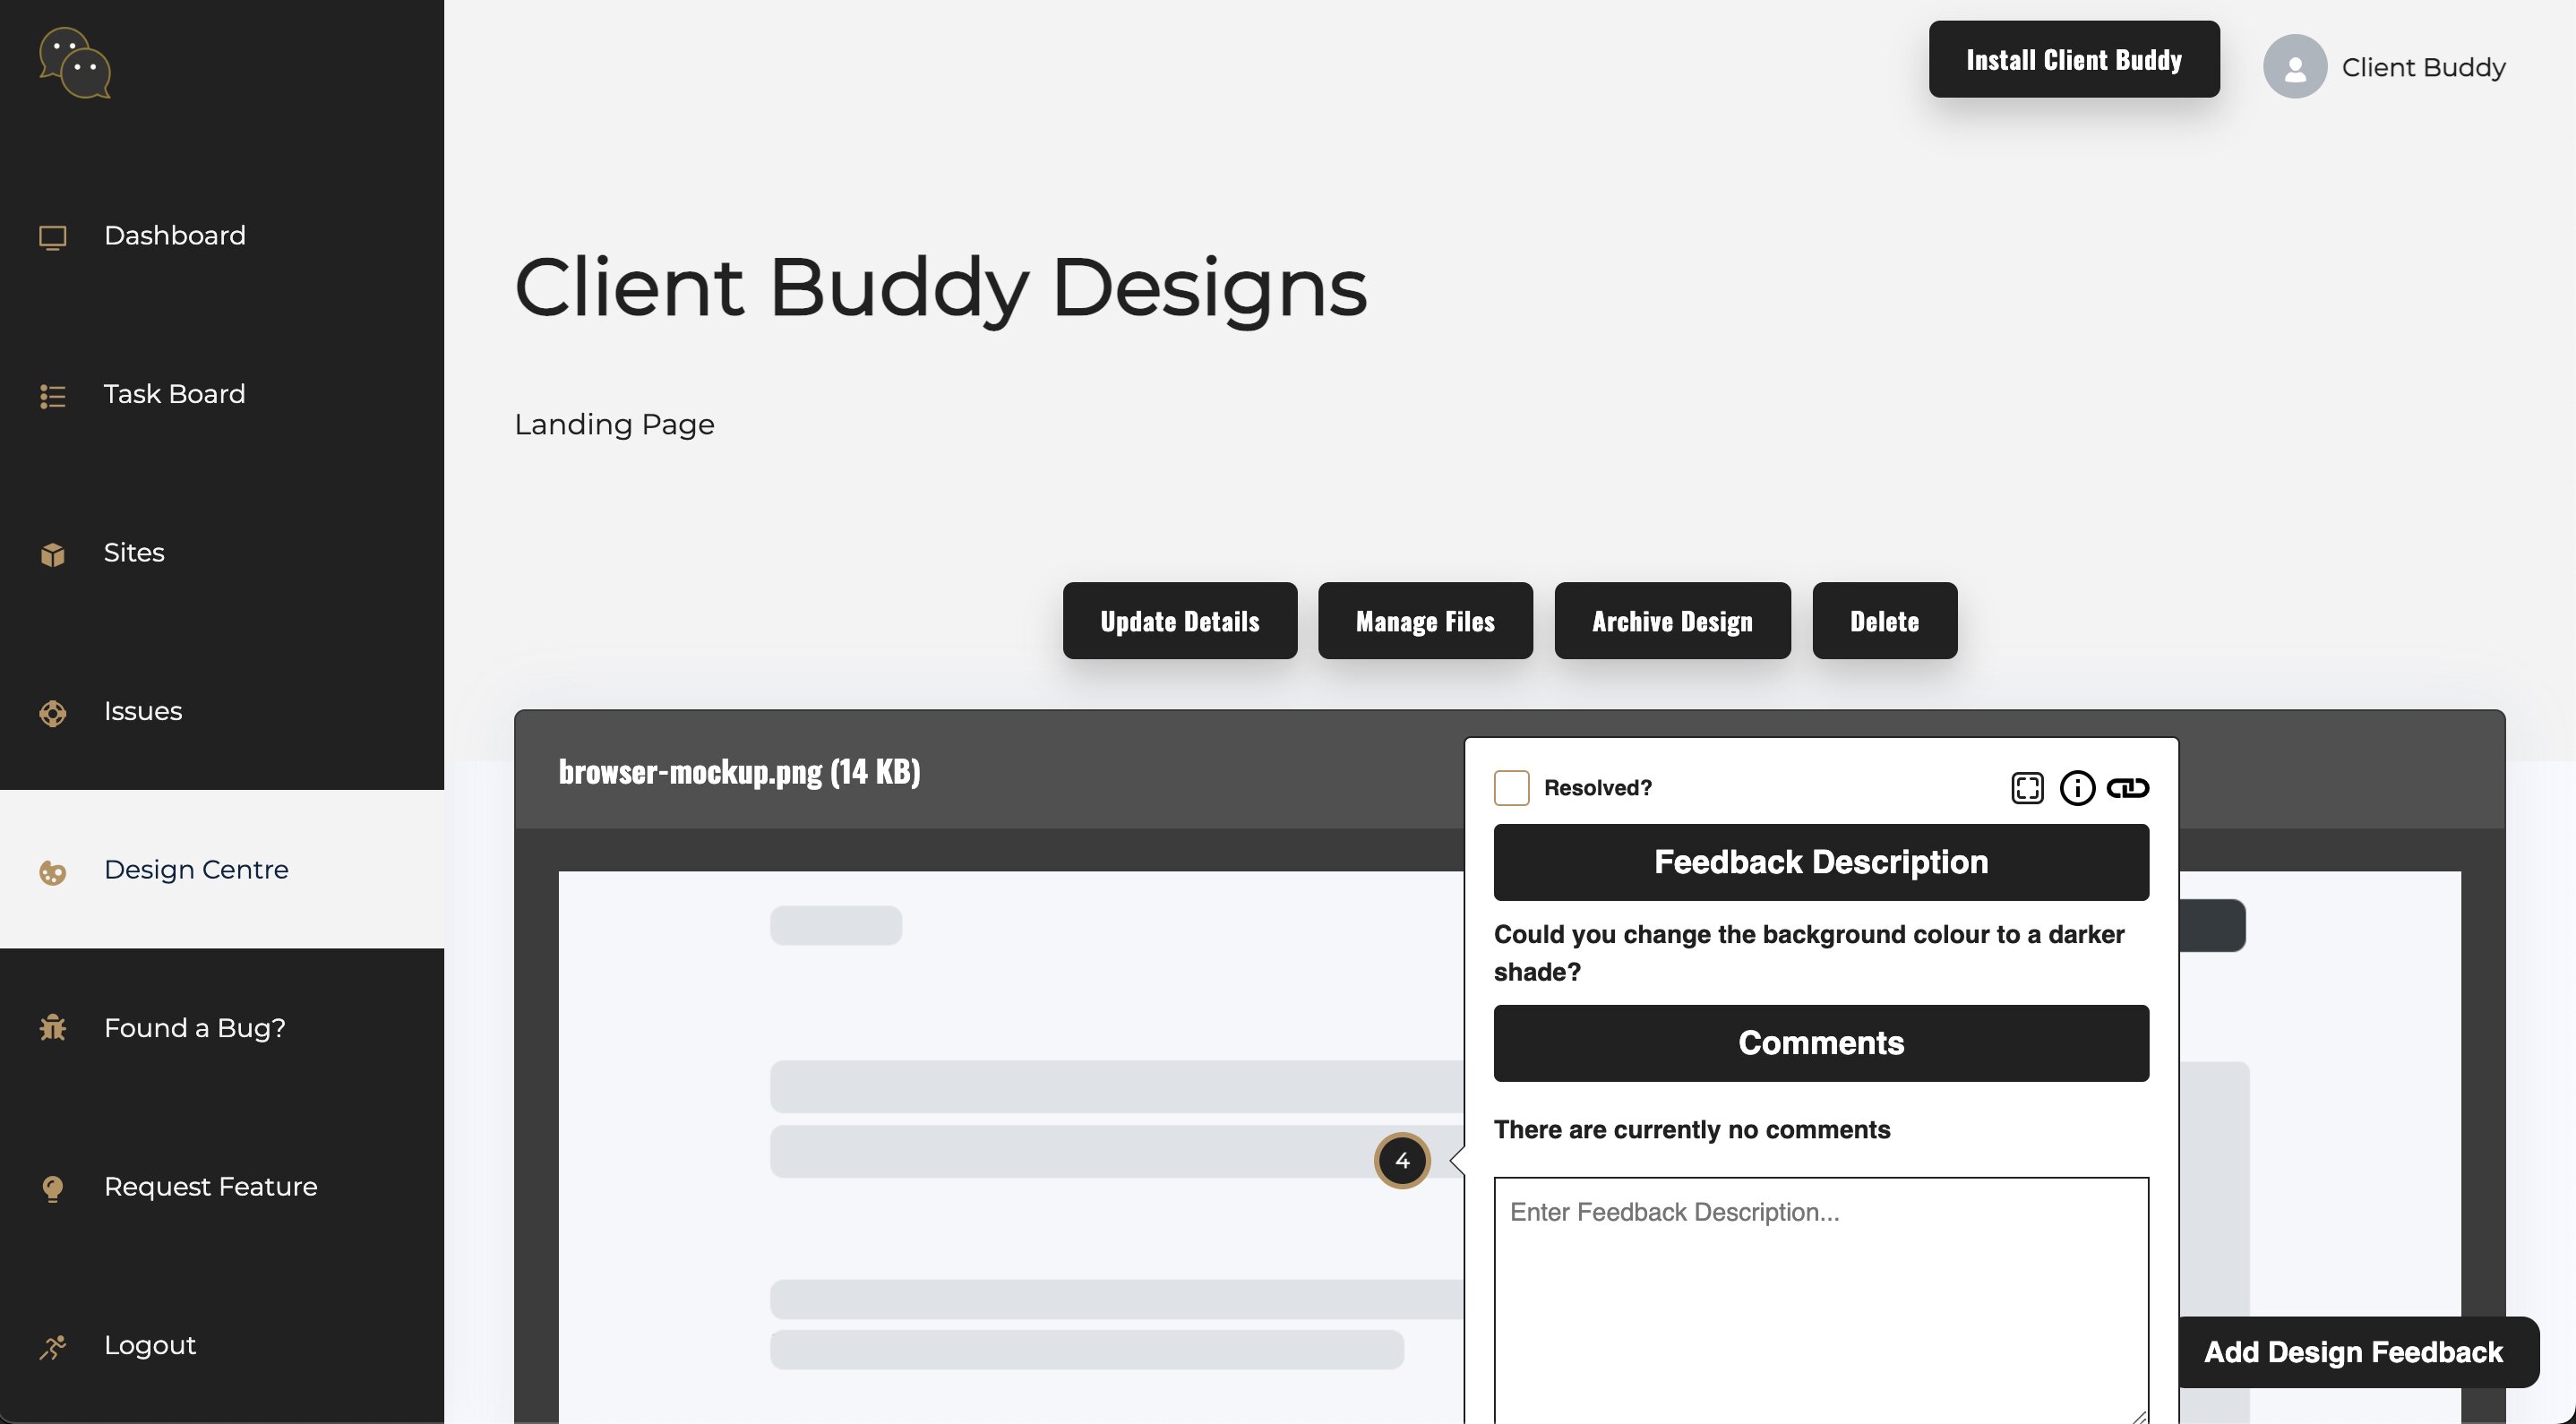 Client Buddy design center page